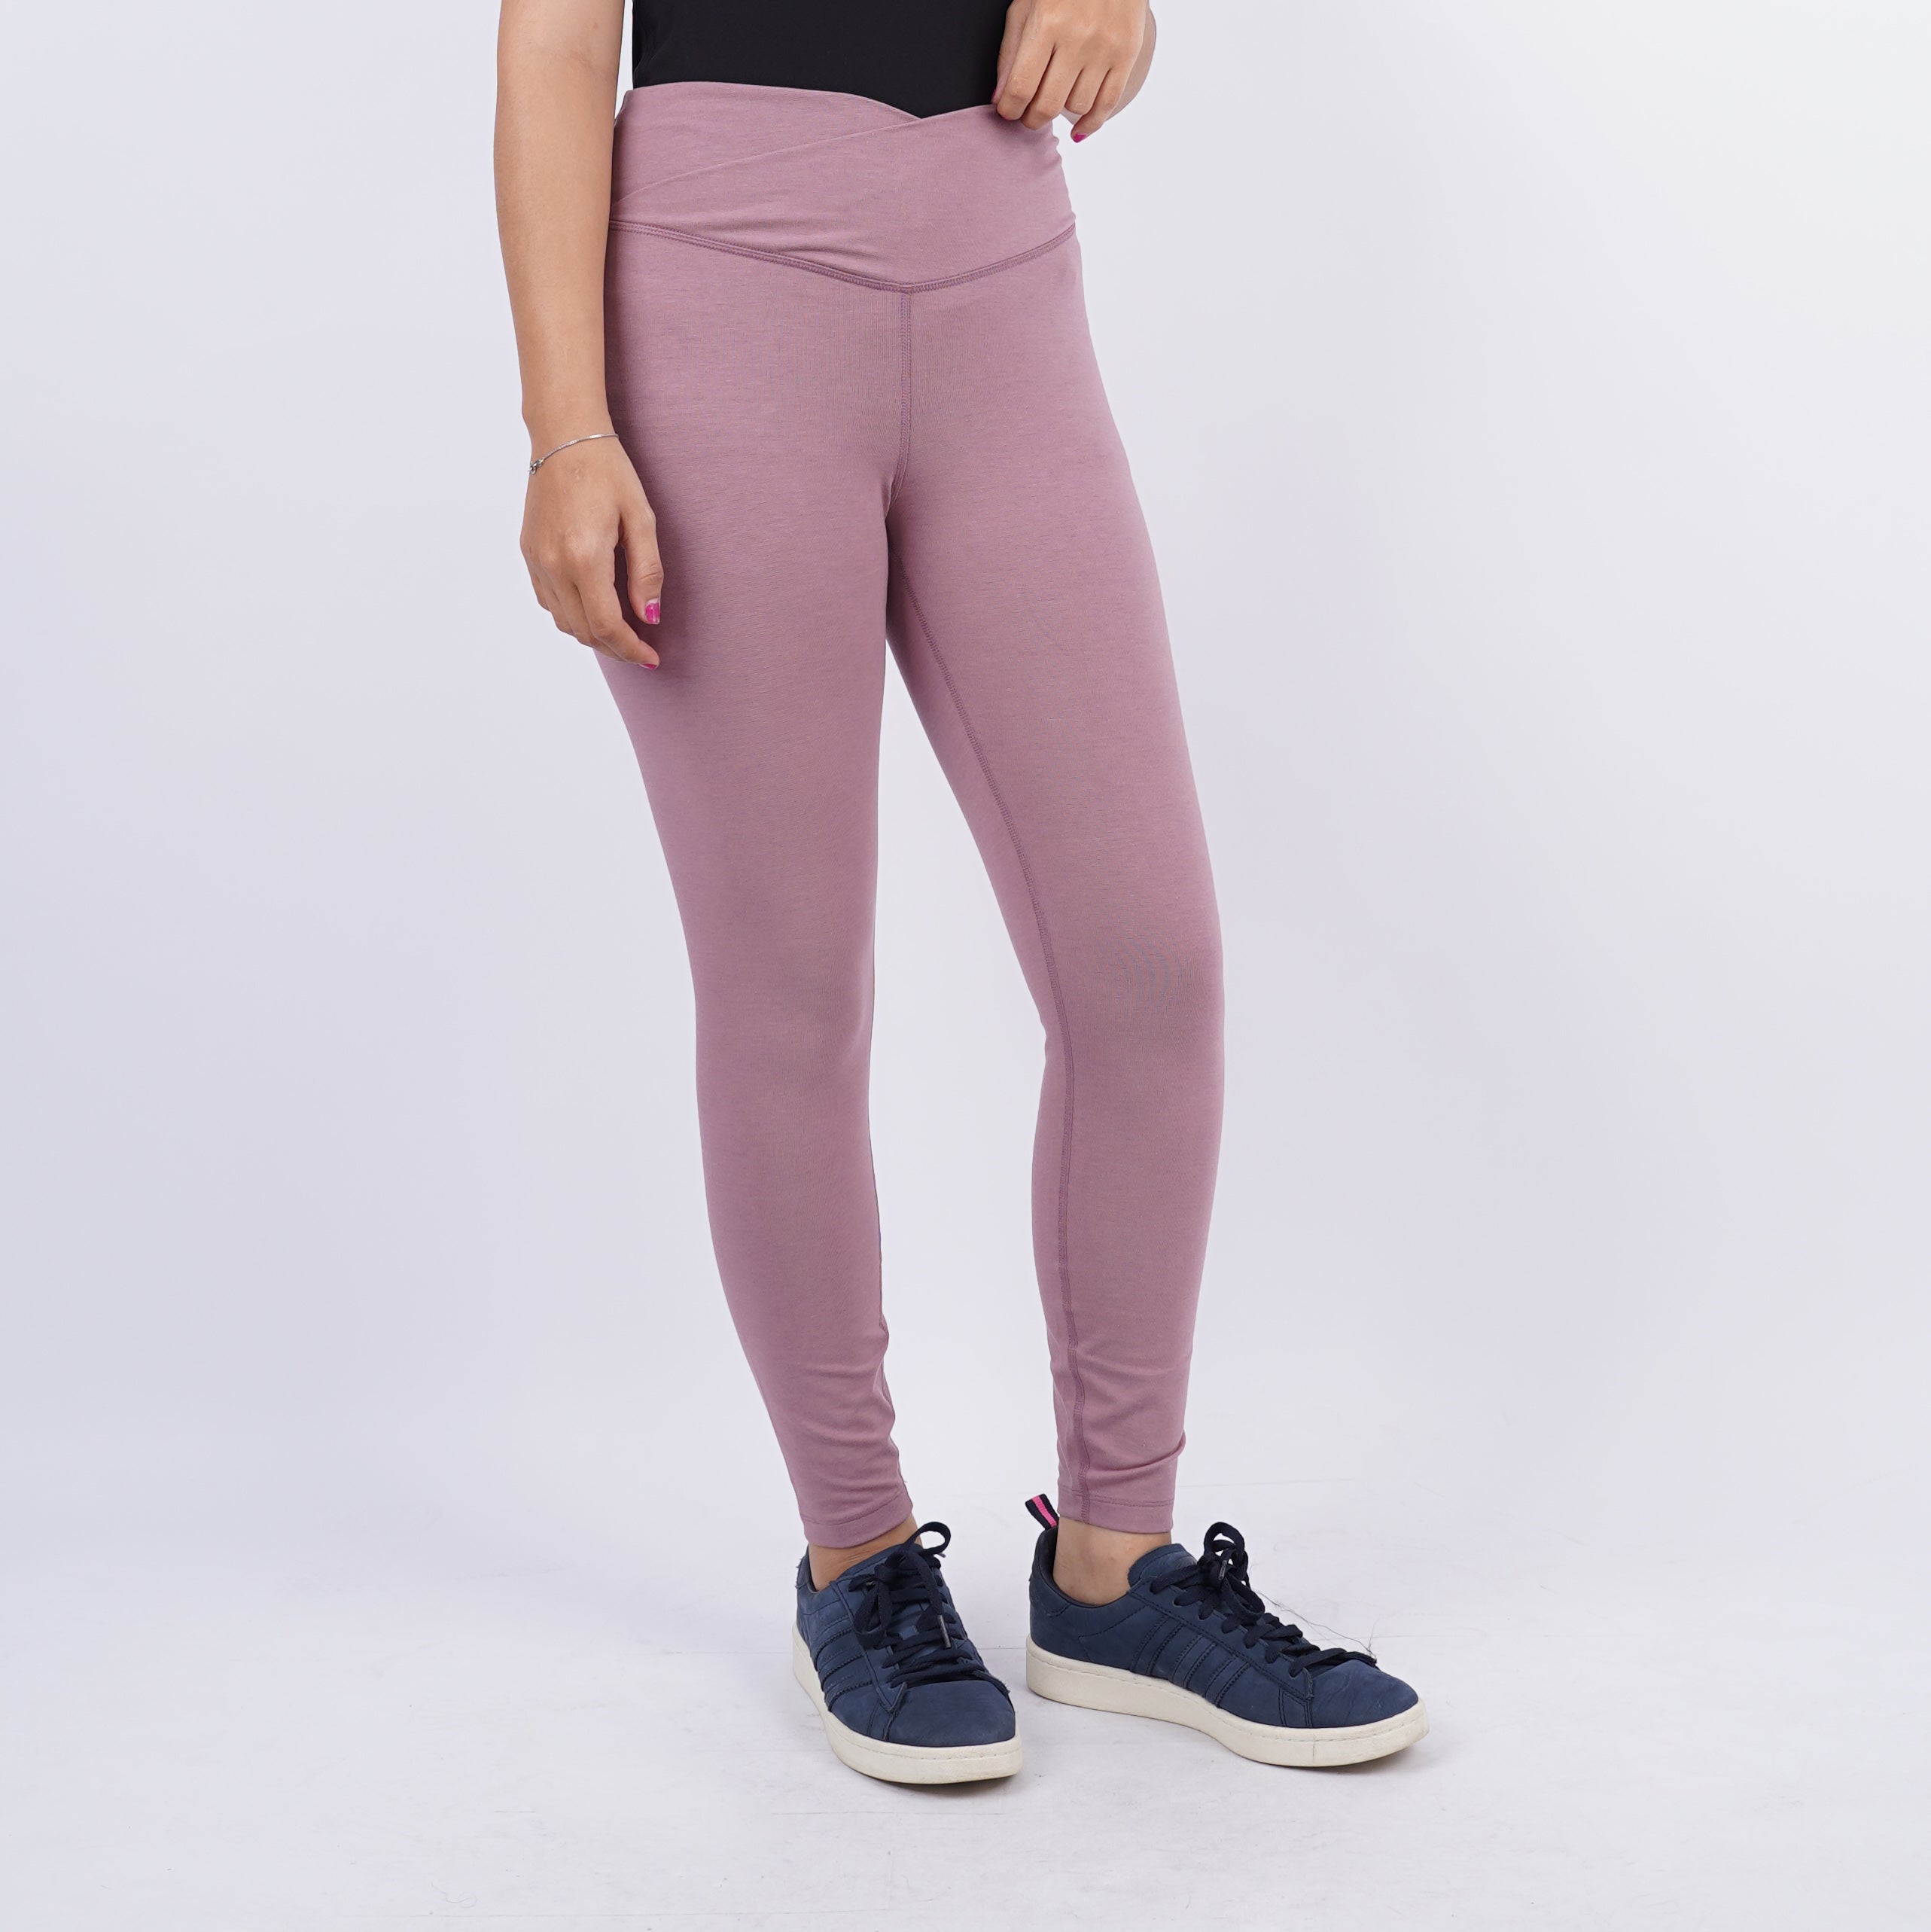 Legging Sport Wanita Celana Olahraga Untuk Gym/Yoga/Jogging [CG-OLL 02]